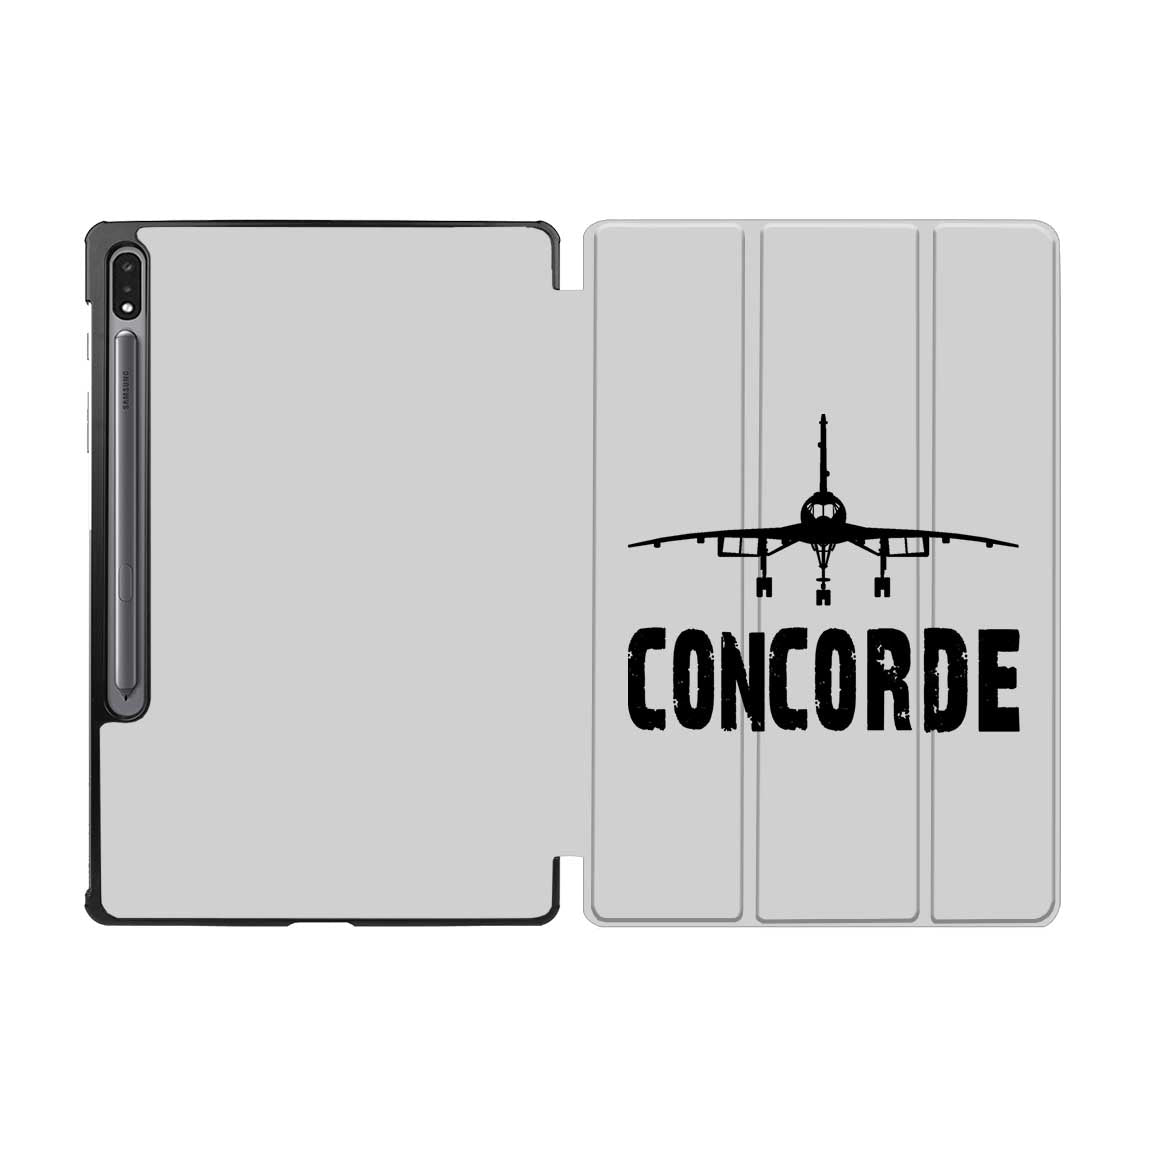 Concorde & Plane Designed Samsung Tablet Cases